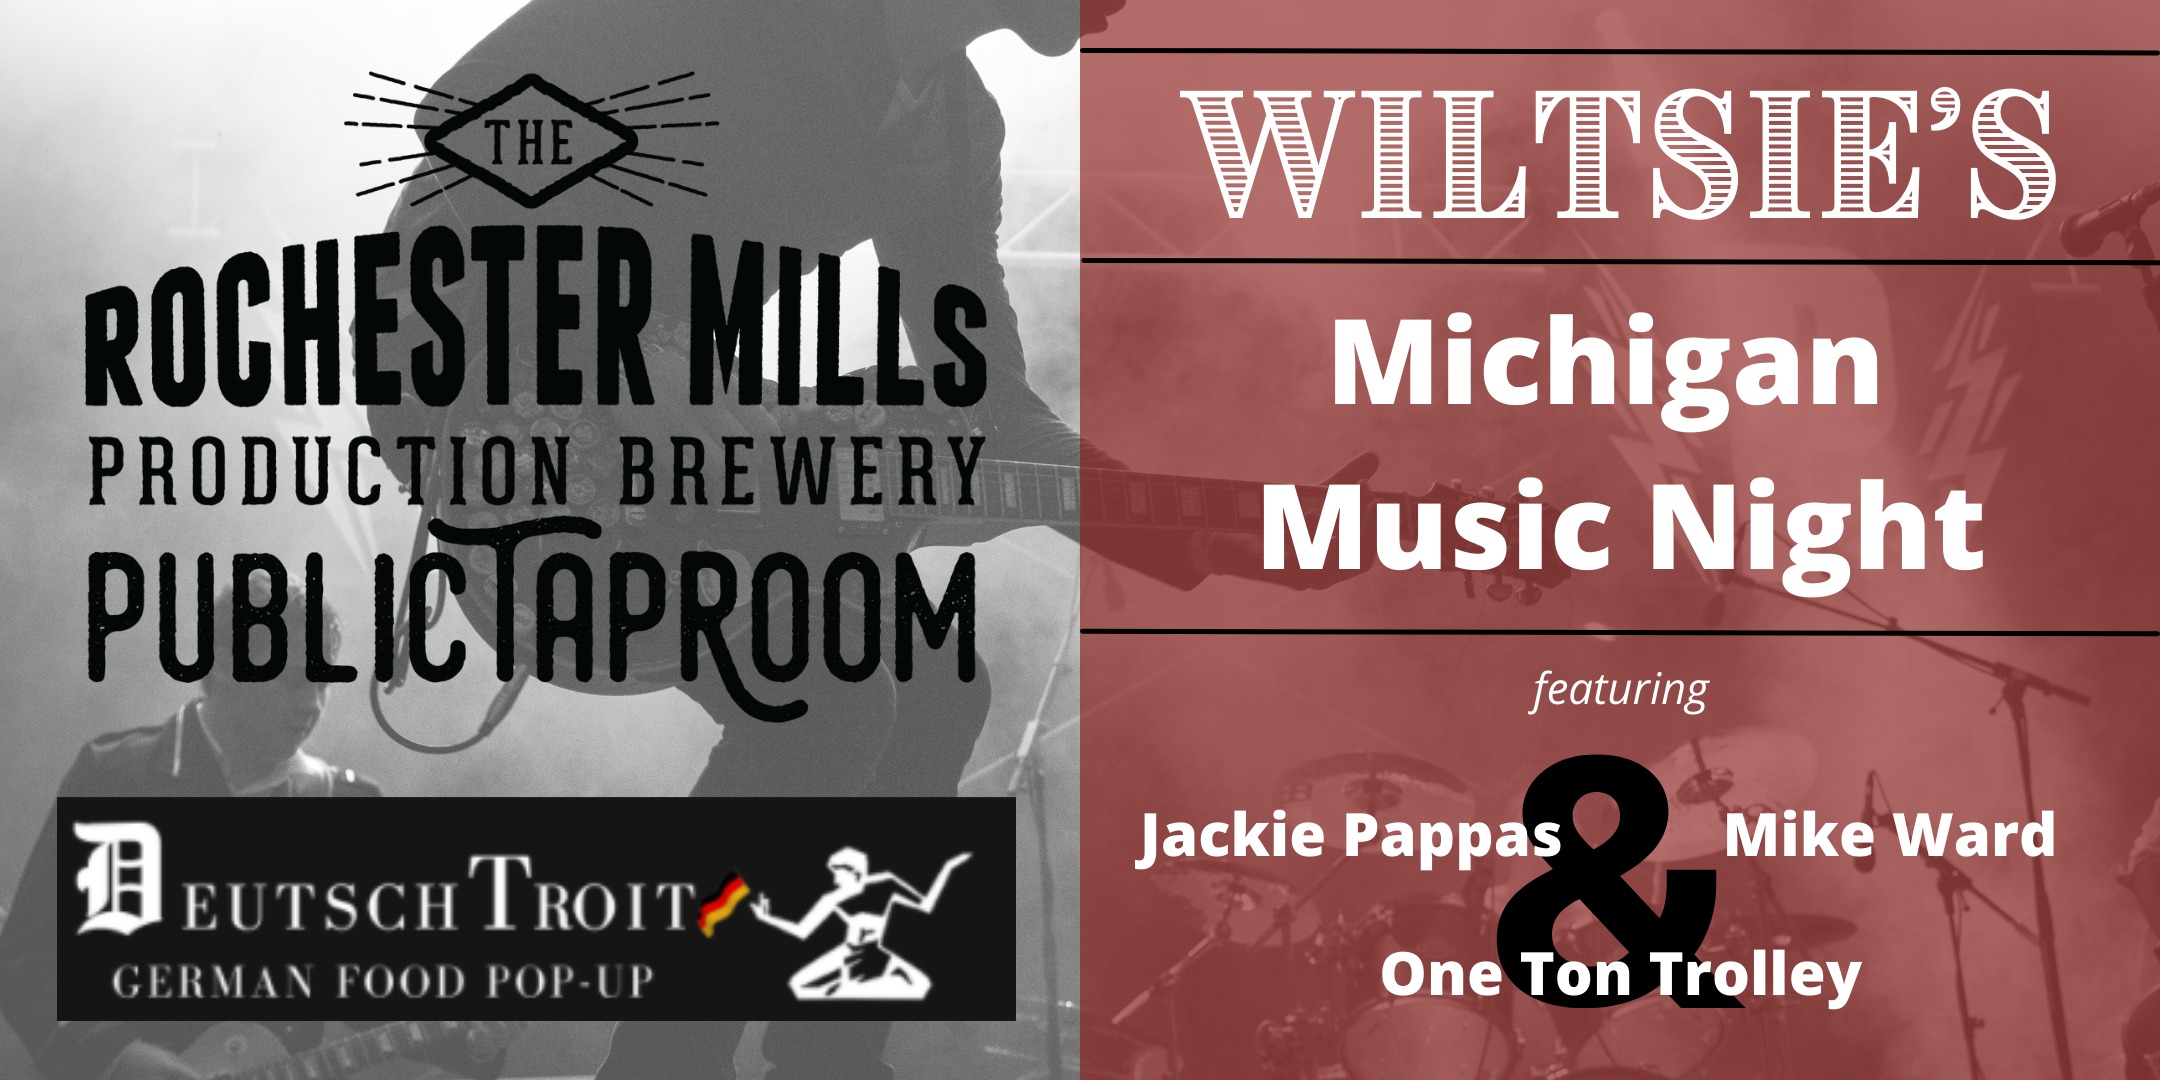 Michigan Music Night @ Rochester Mills Production Brewery